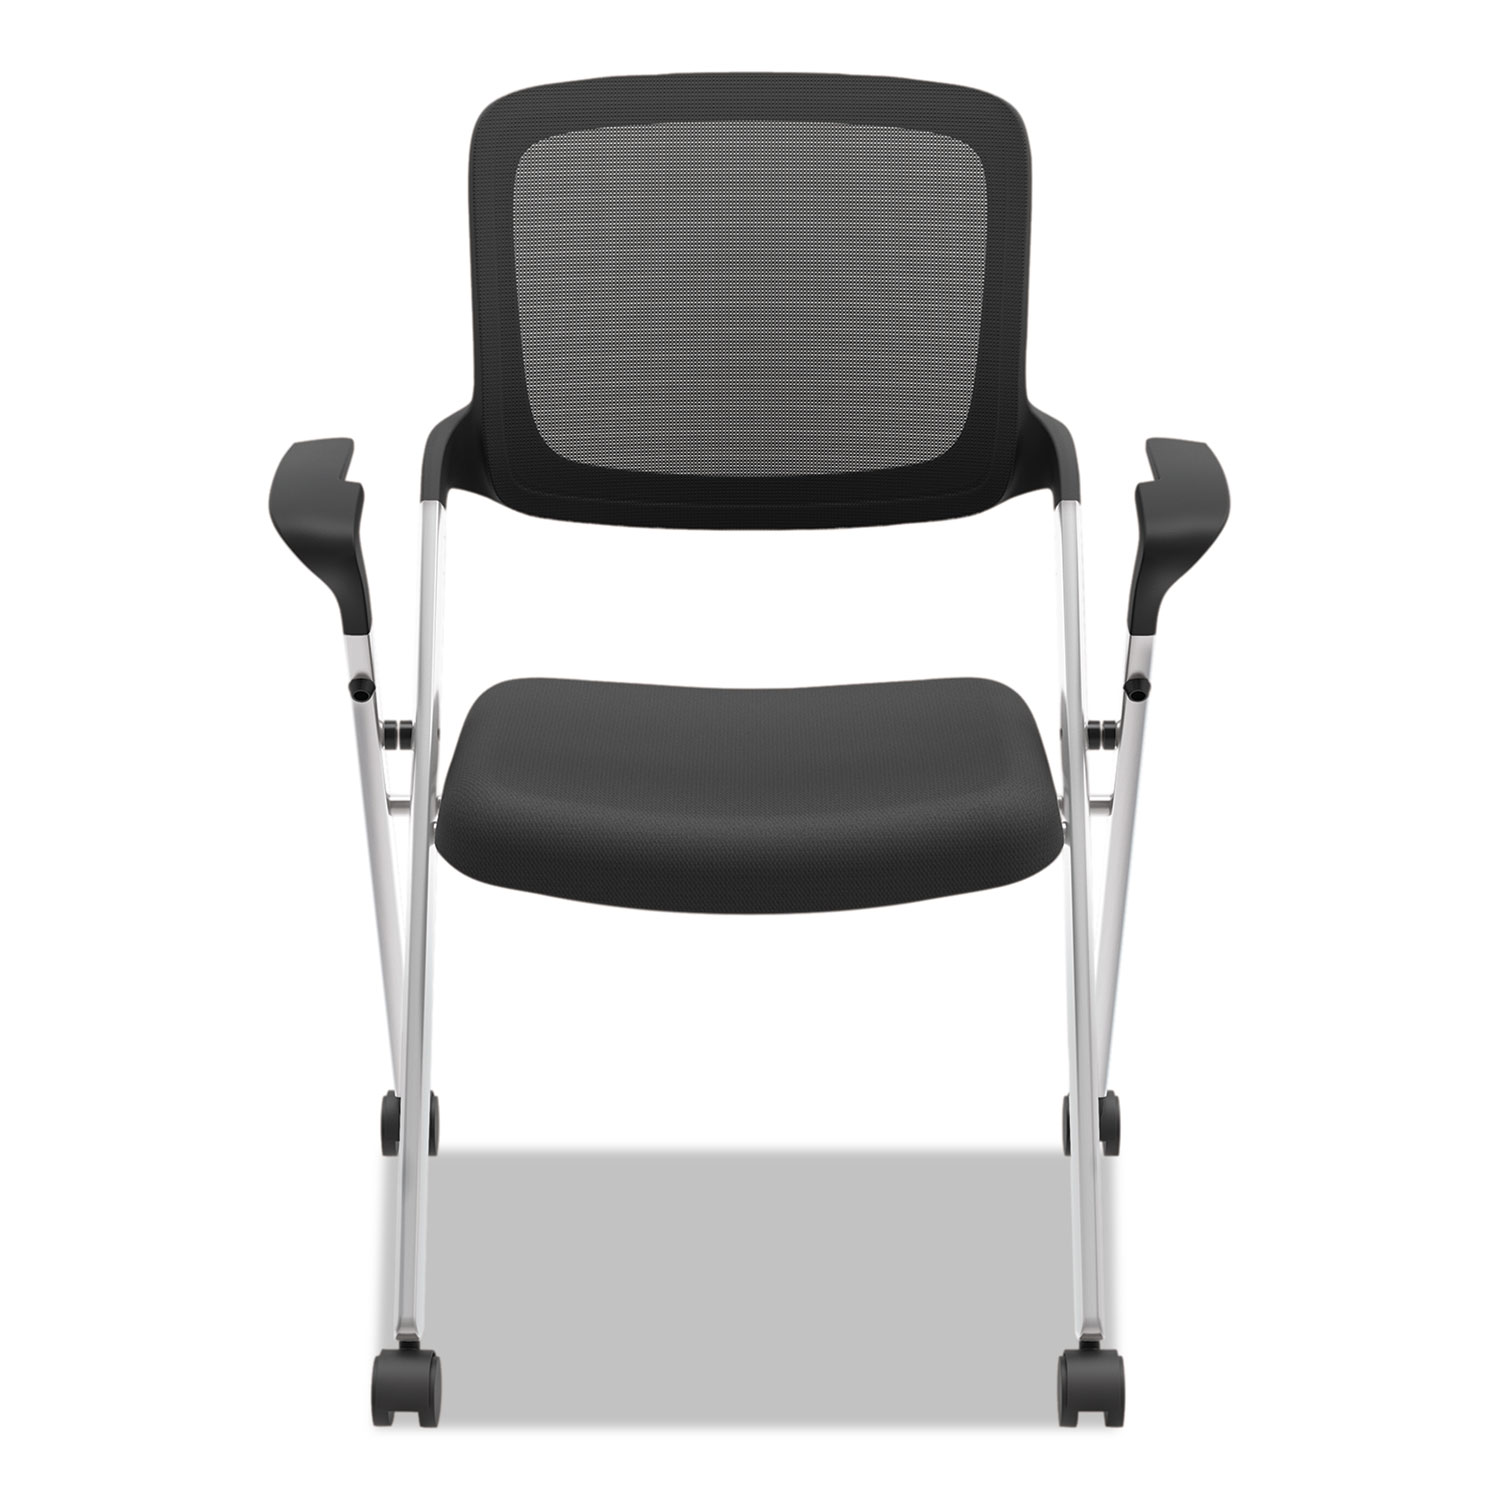  HON HVL314.VA10.X VL314 Mesh Back Nesting Chair, Black Seat/Black Back, Silver Base (BSXVL314SLVR) 